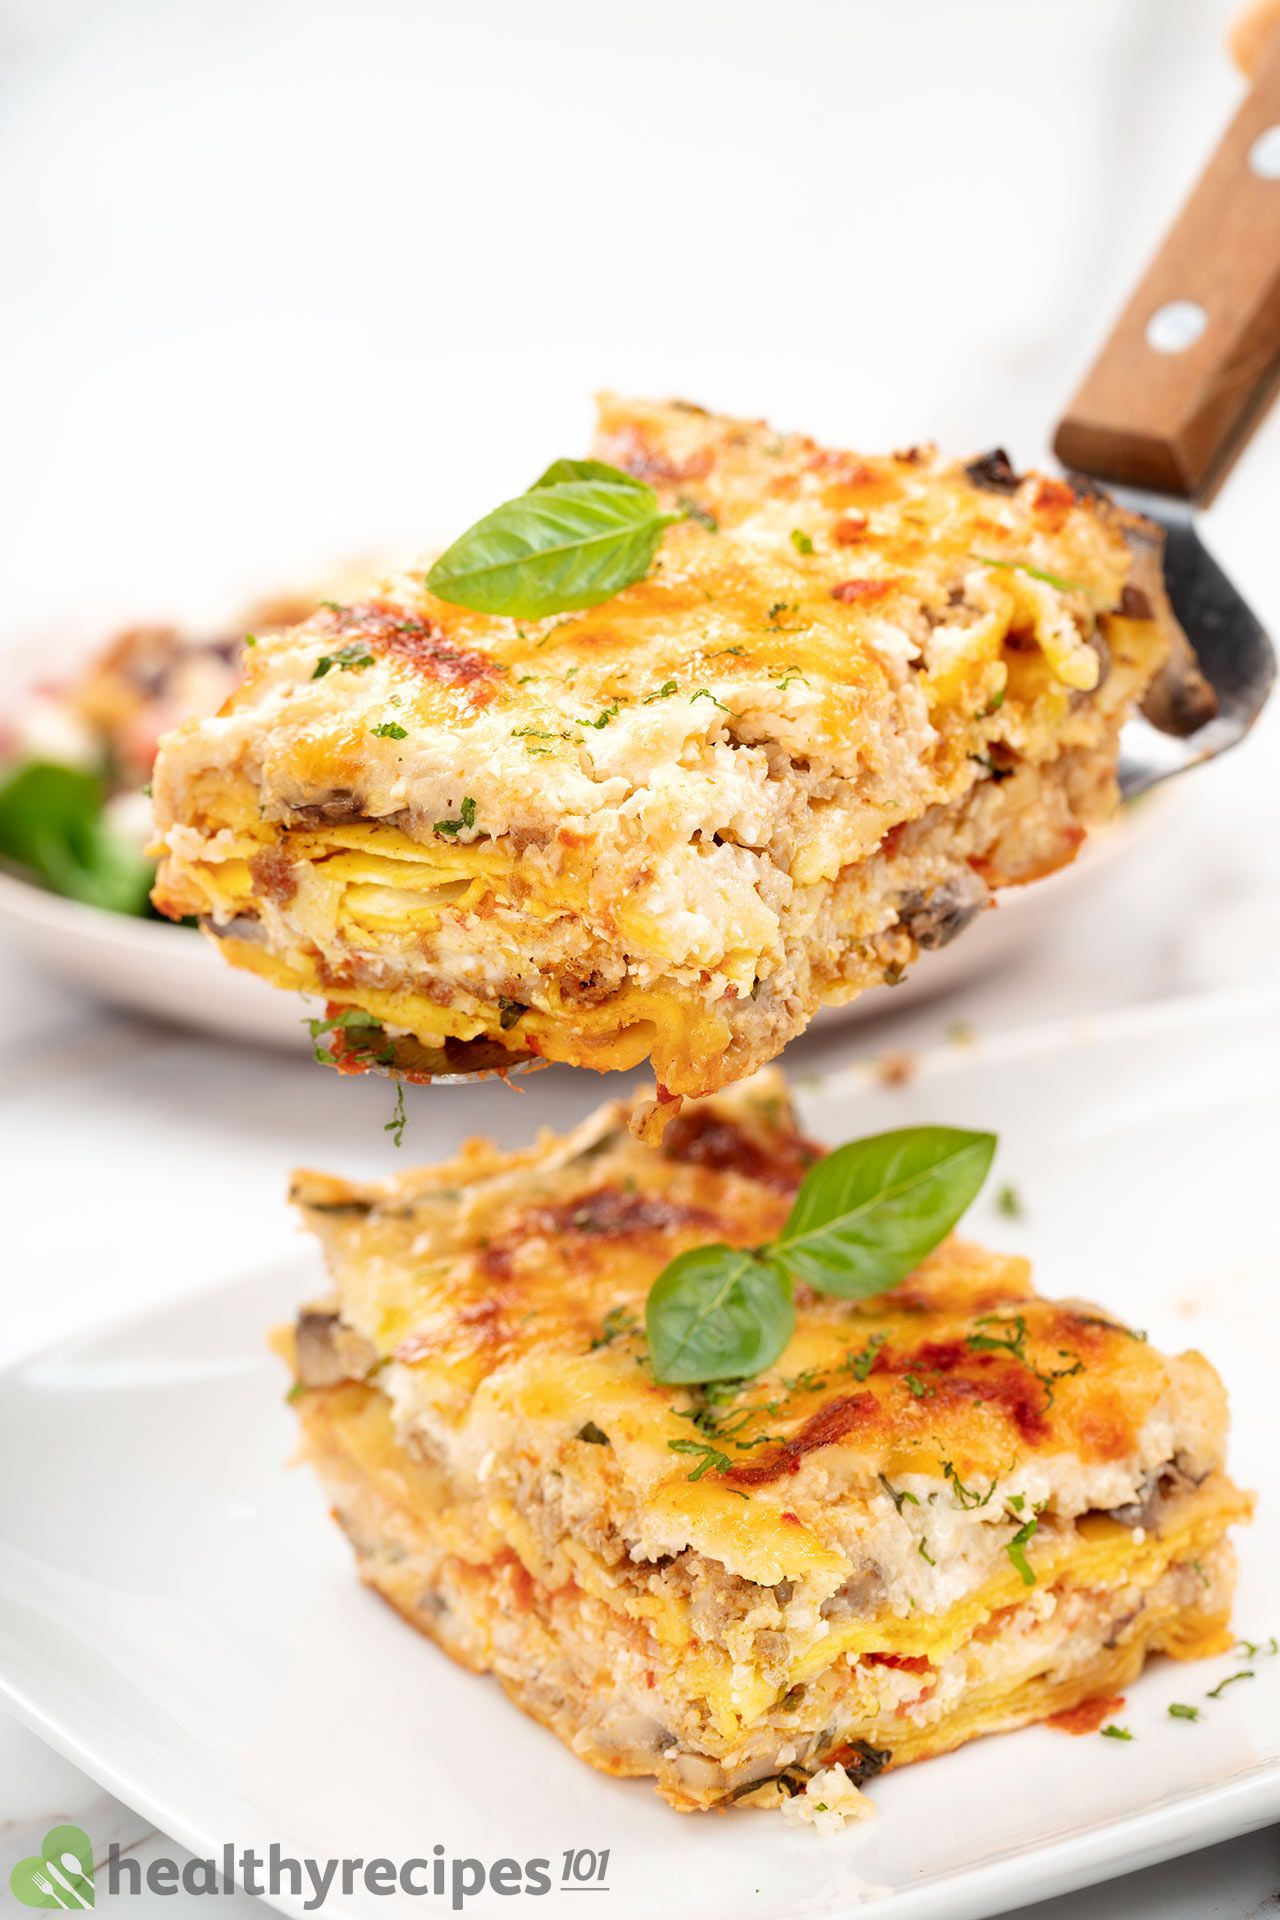 Cauliflower Lasagna Recipe A Healthy Hearty And High Fiber Meal